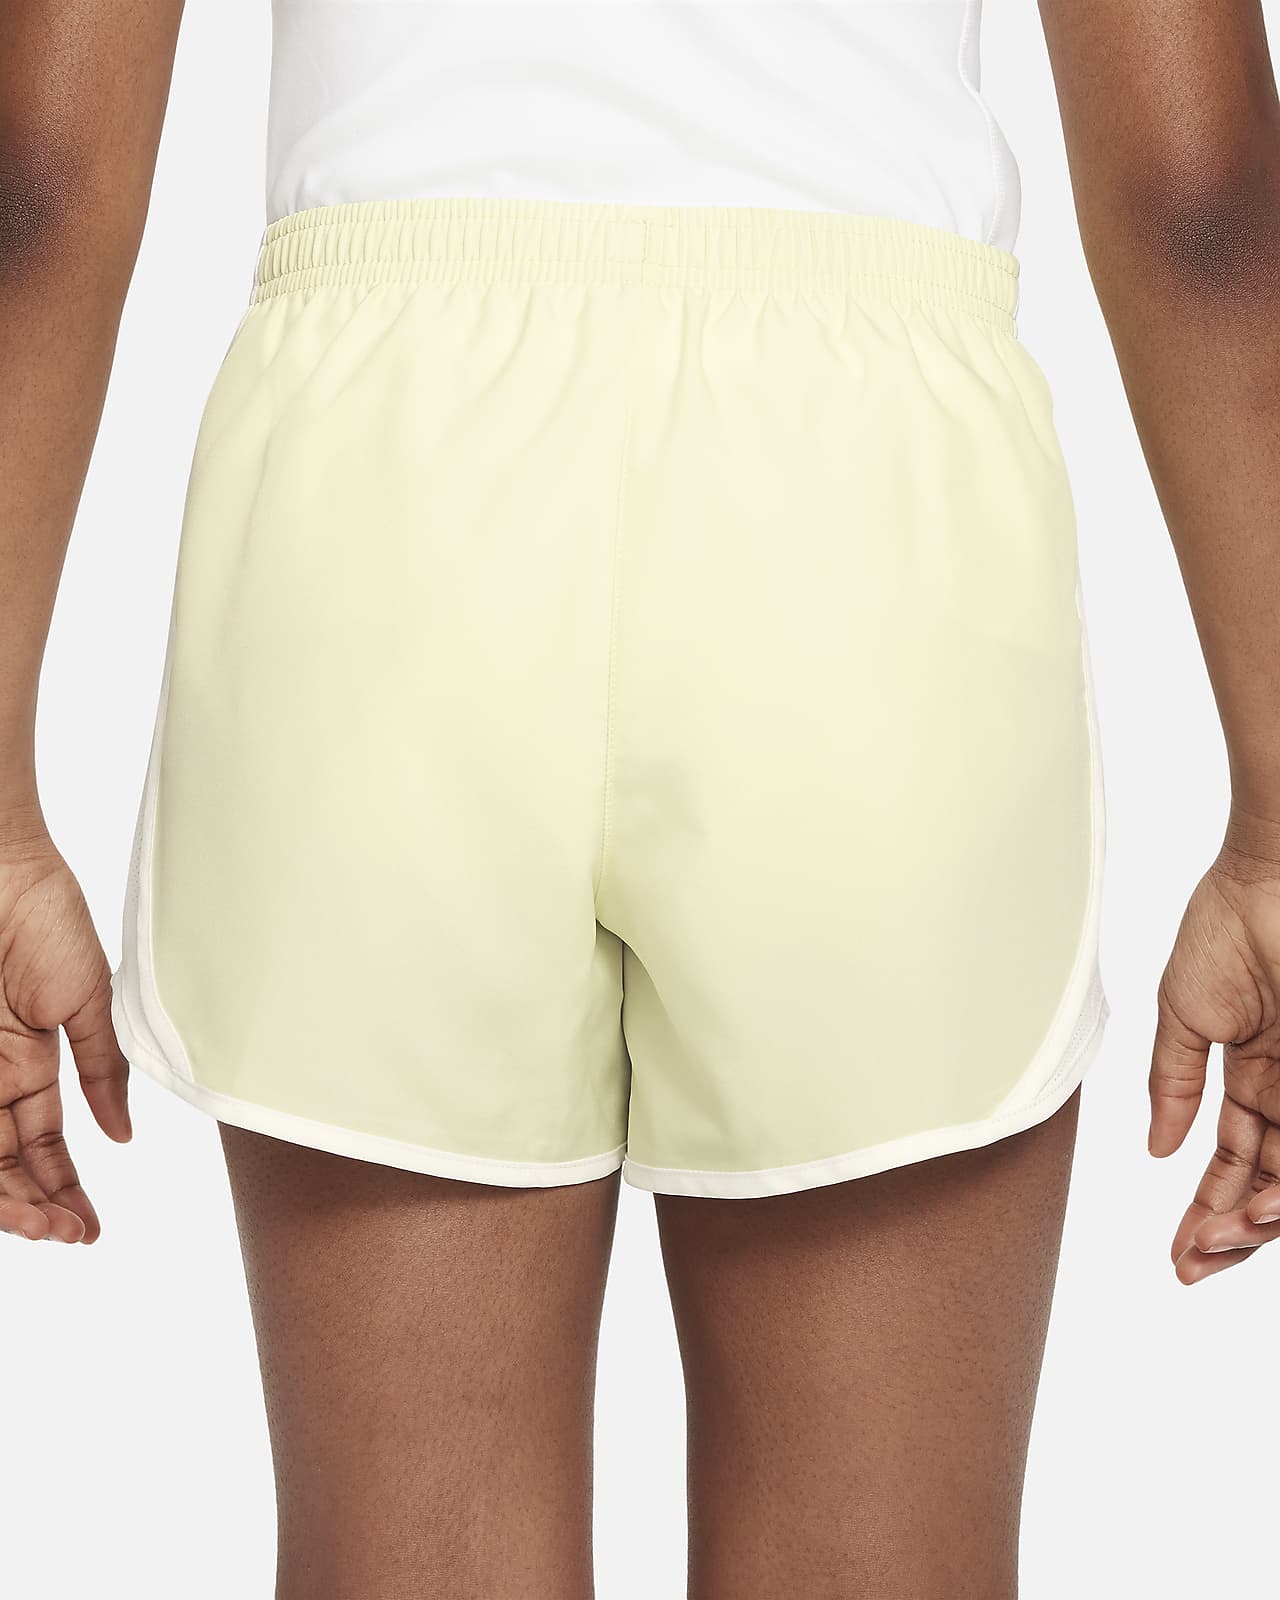 Nike Running Shorts Built In Underwear Green Girls Size Medium 455912-343 